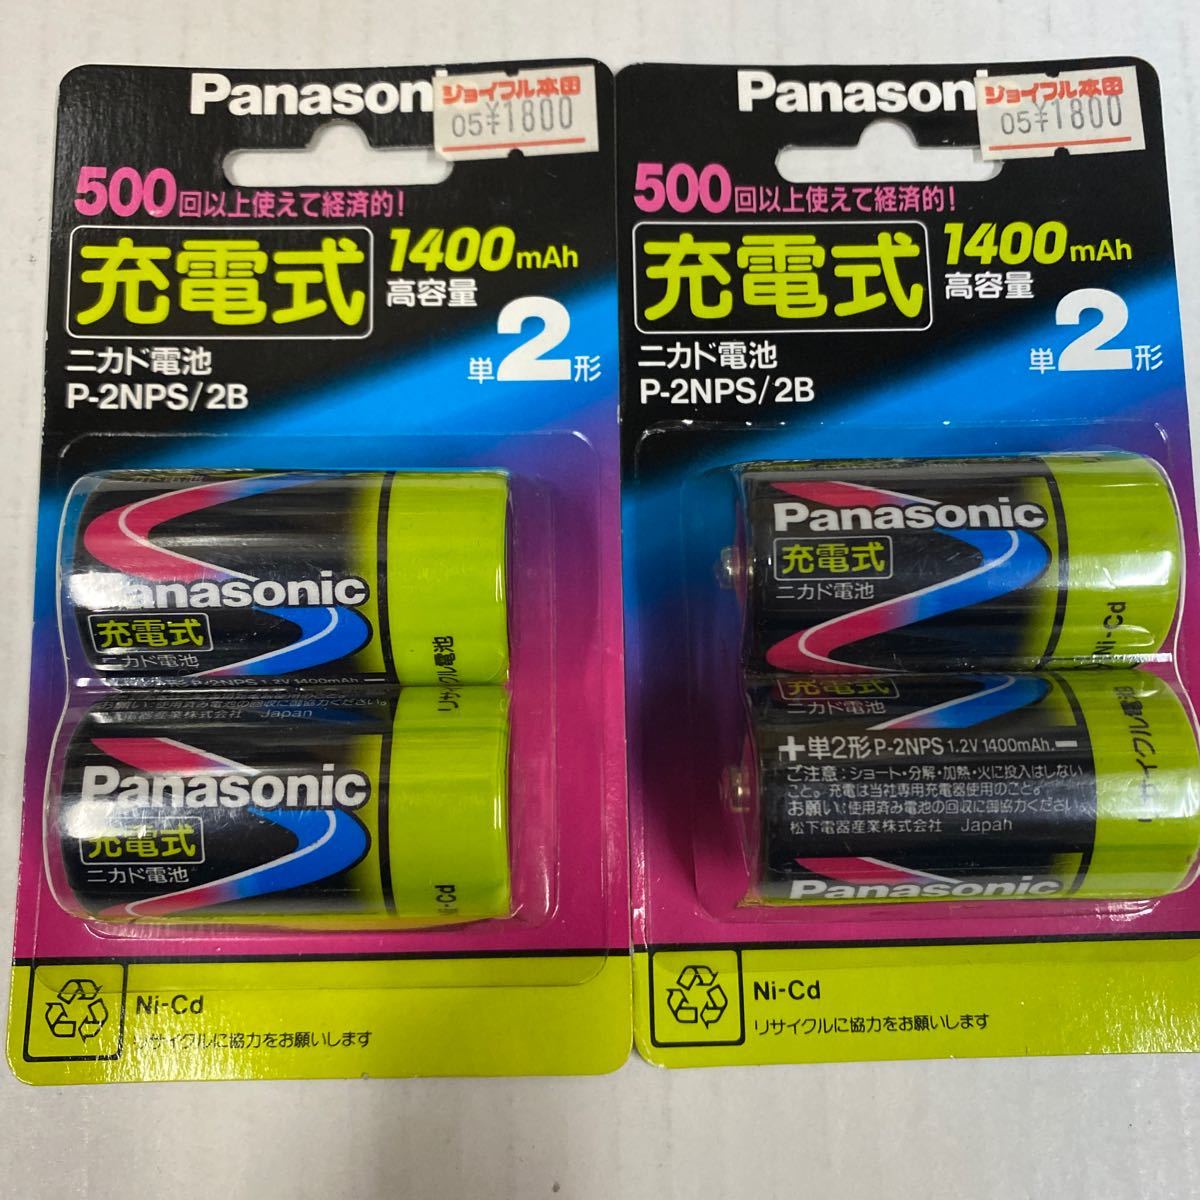 Panasonic rechargeable battery nikado1400 single 2 shape nikado rechargeable P2NPS/2B period thing 